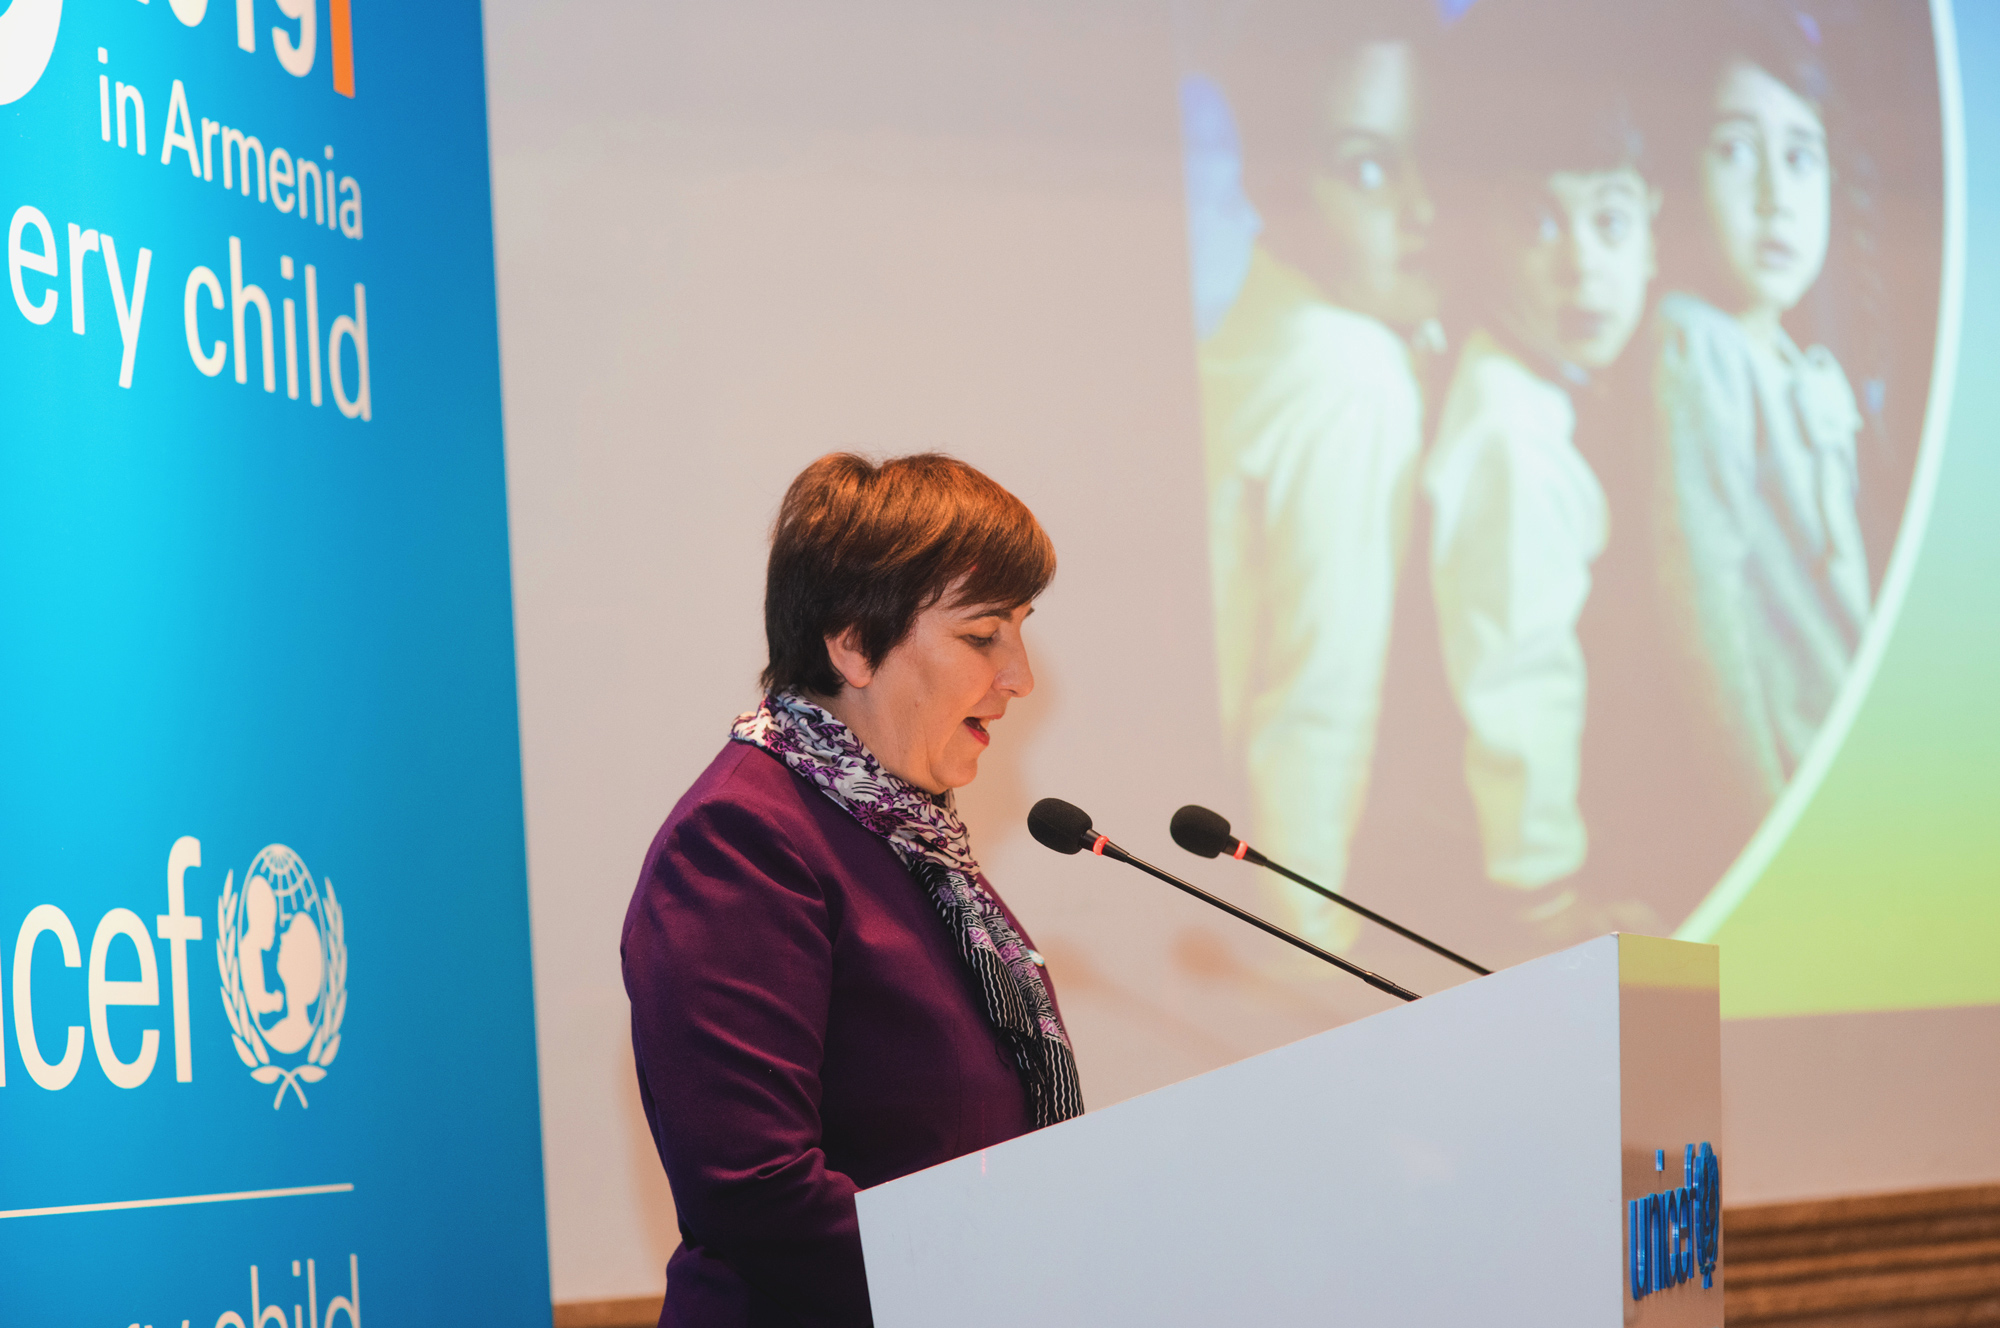 UNICEF’S 25TH ANNIVERSARY IN ARMENIA